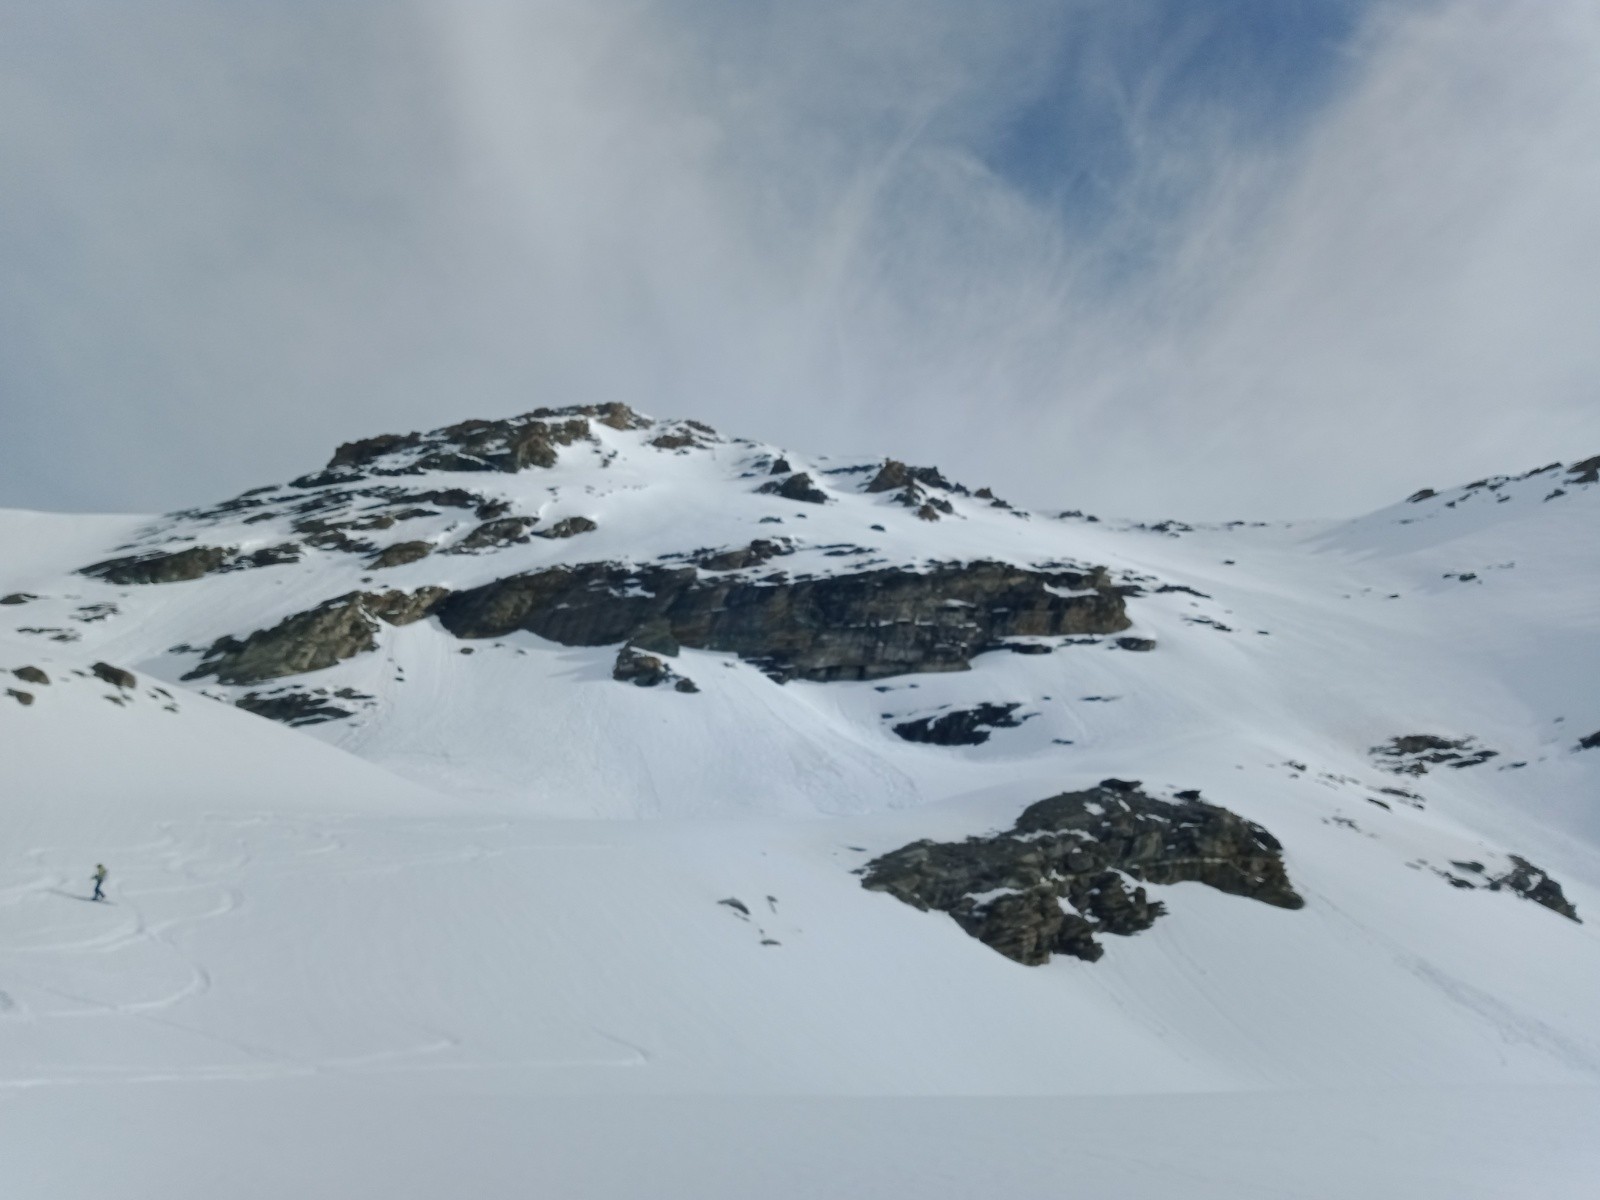  Sommet de l'Albaron vu du glacier du Colerin